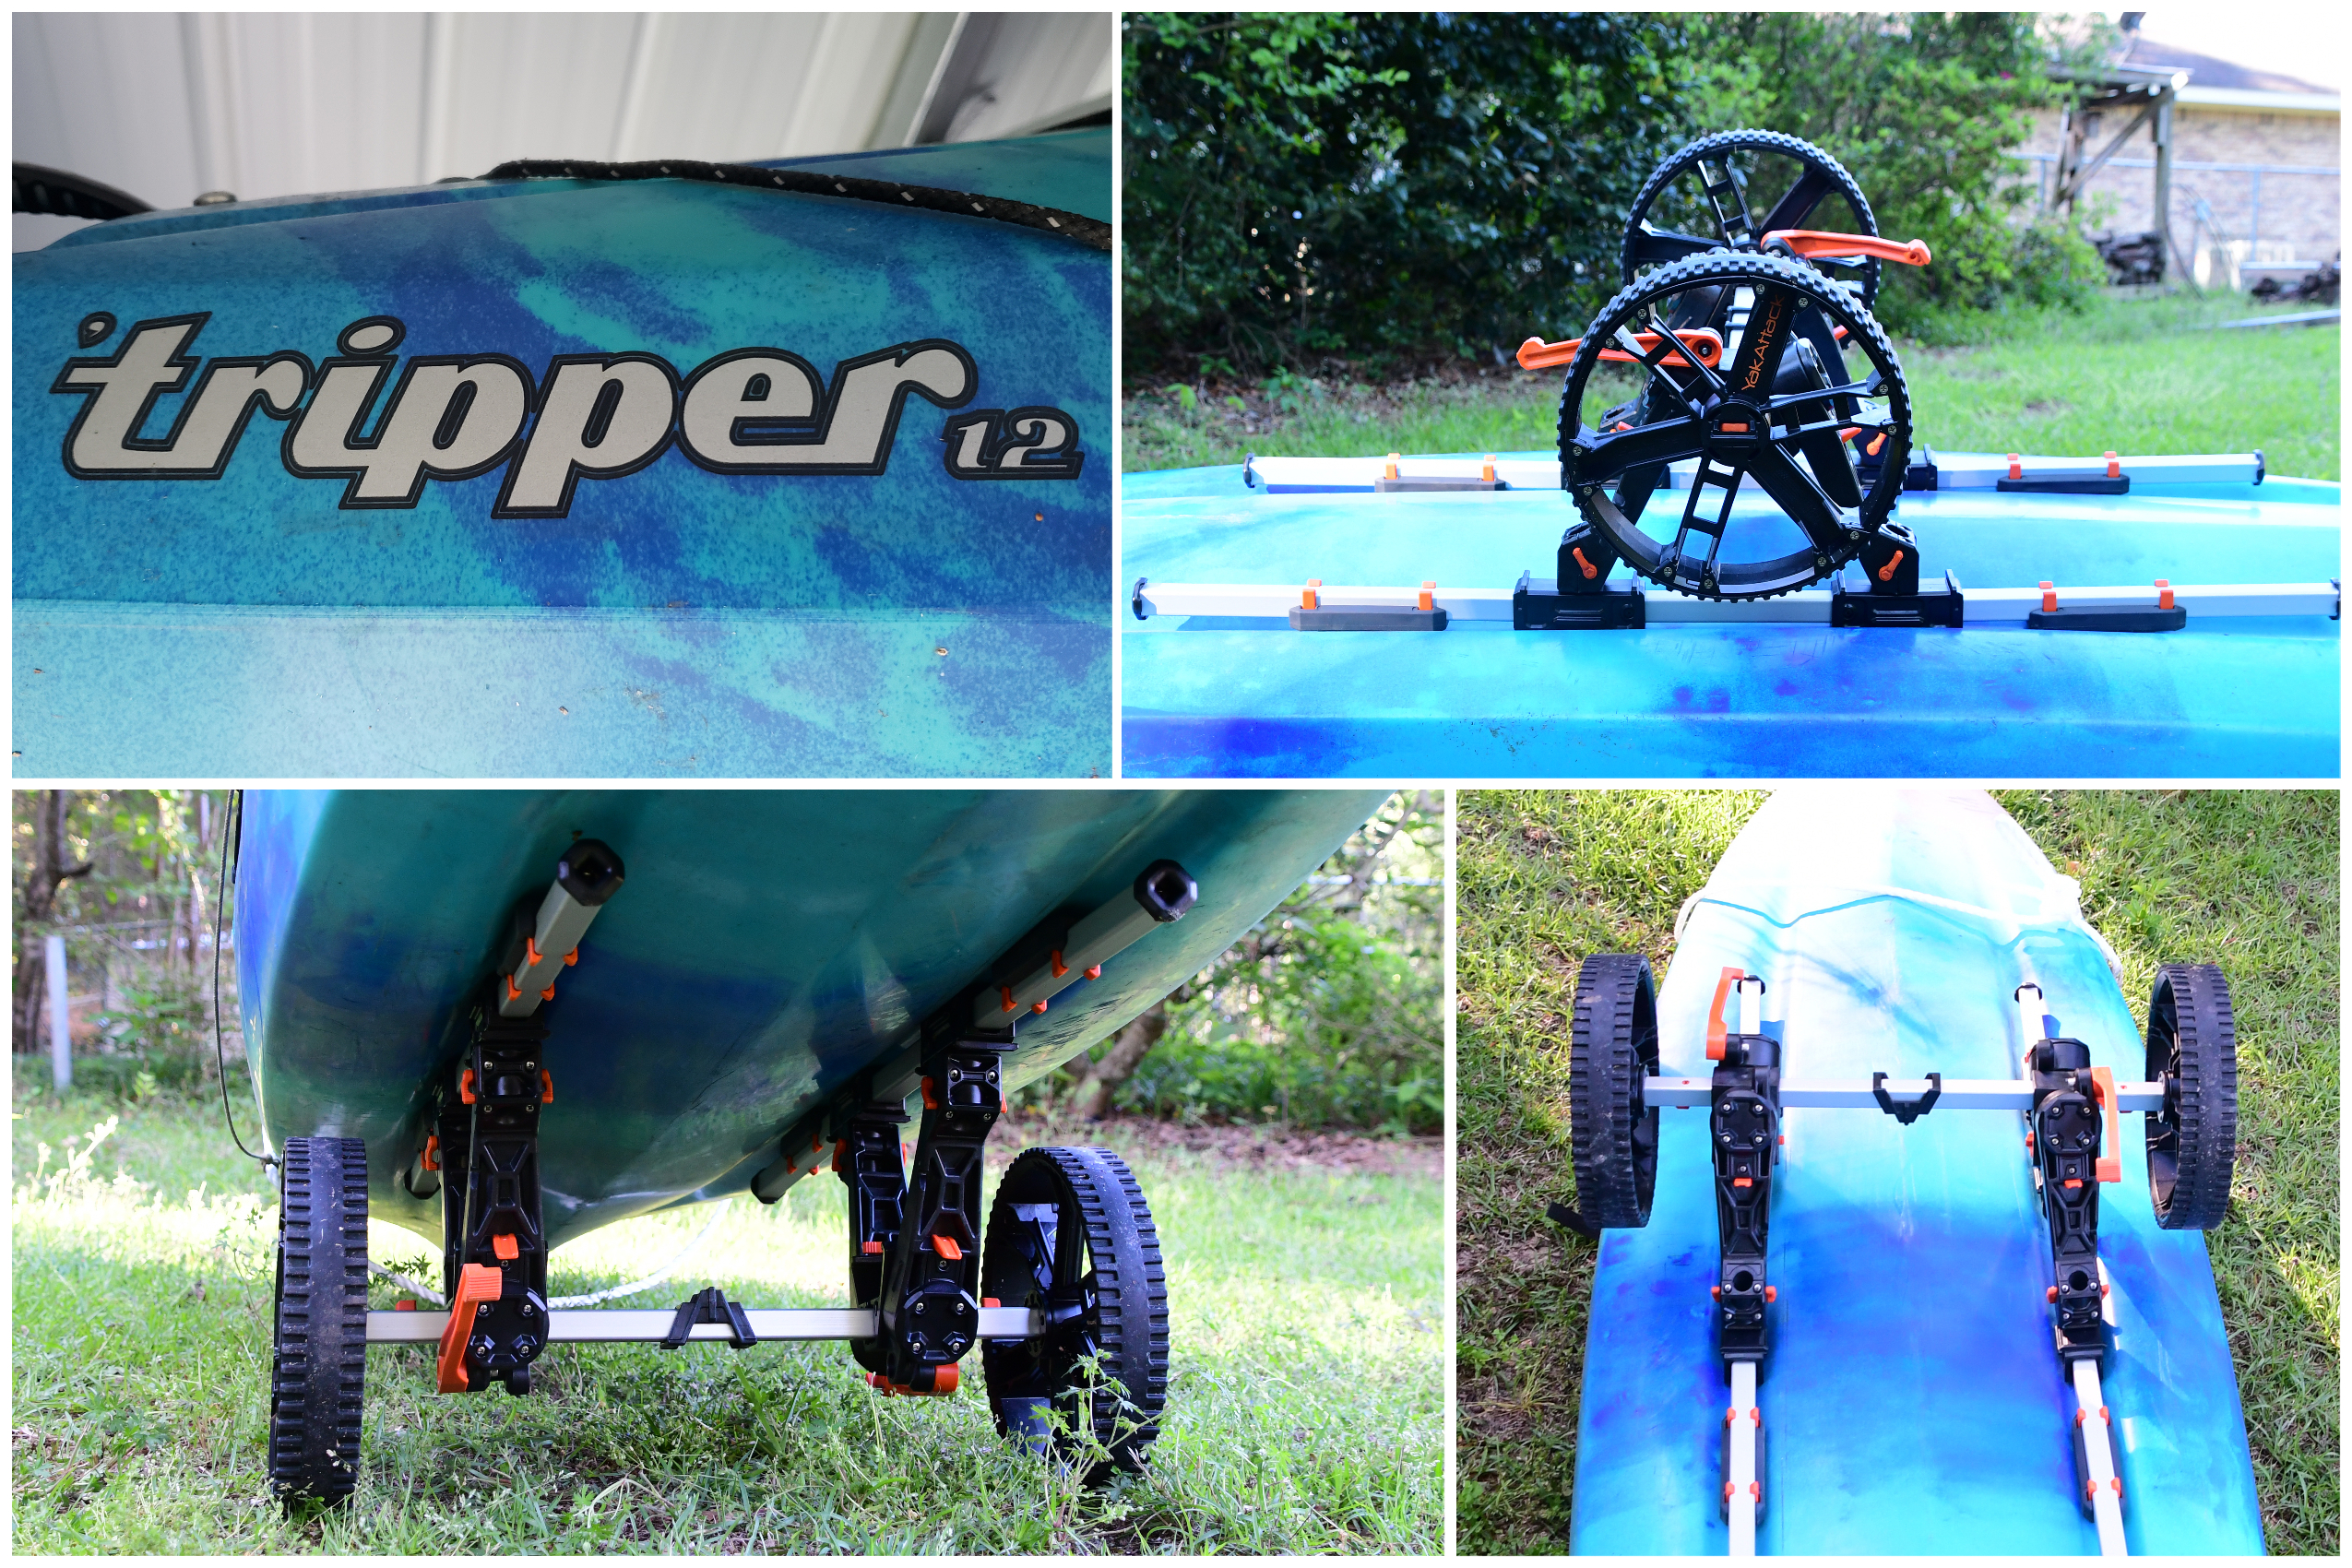 Jackson Tripper 12 with YakAttack TowNStow BarCart Kayak Cart